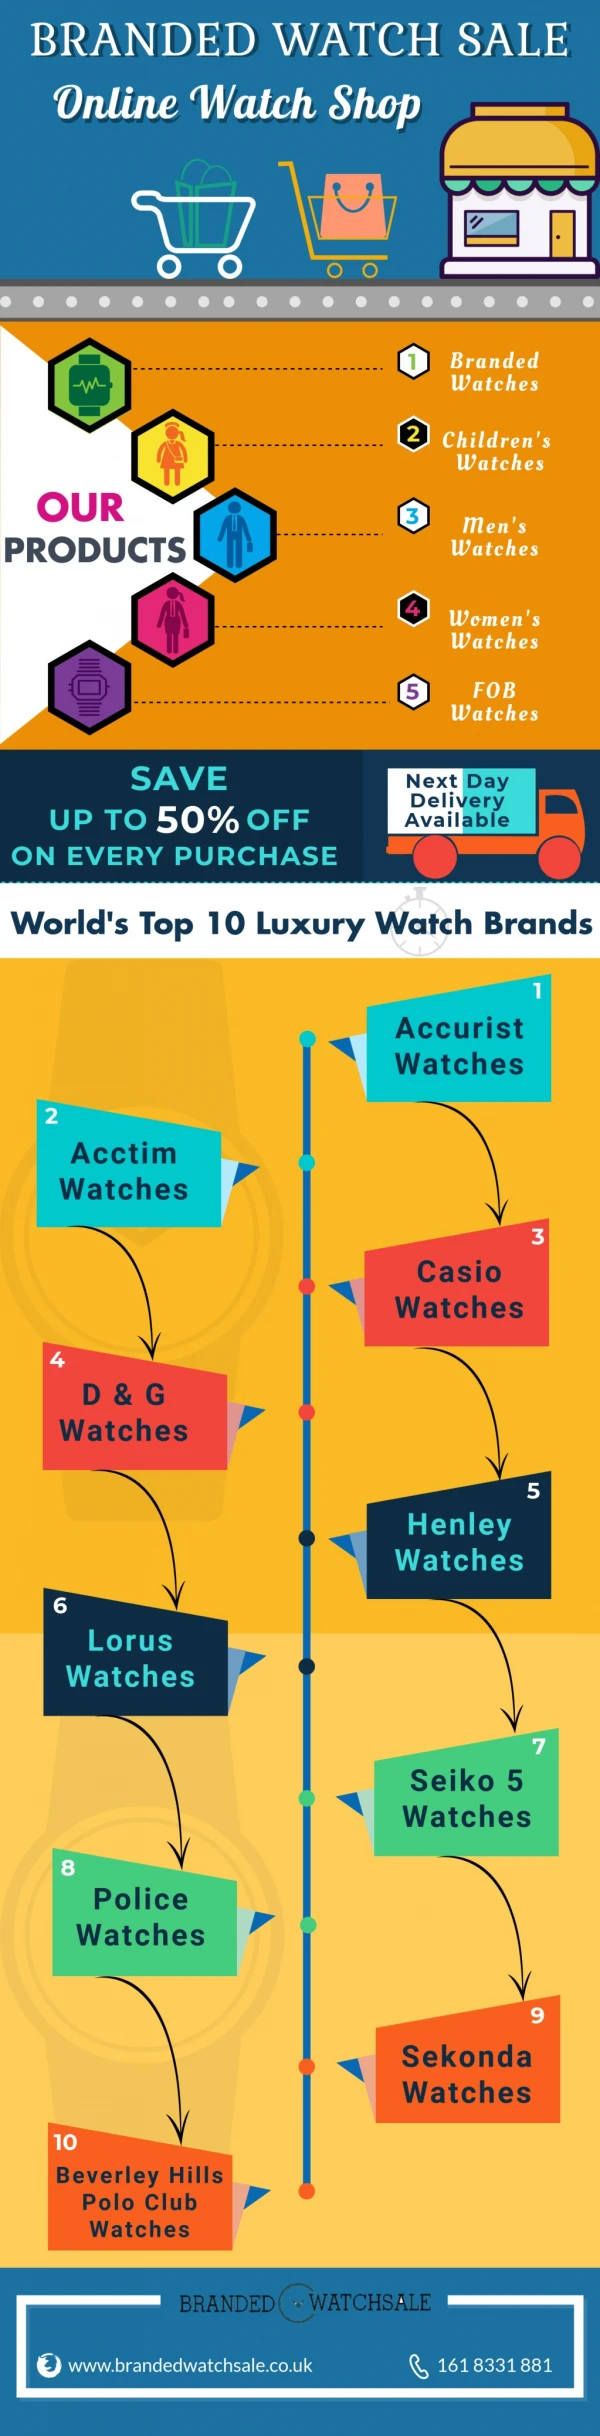 World's Top 10 Luxury Watch Brands – Branded Watch Sale